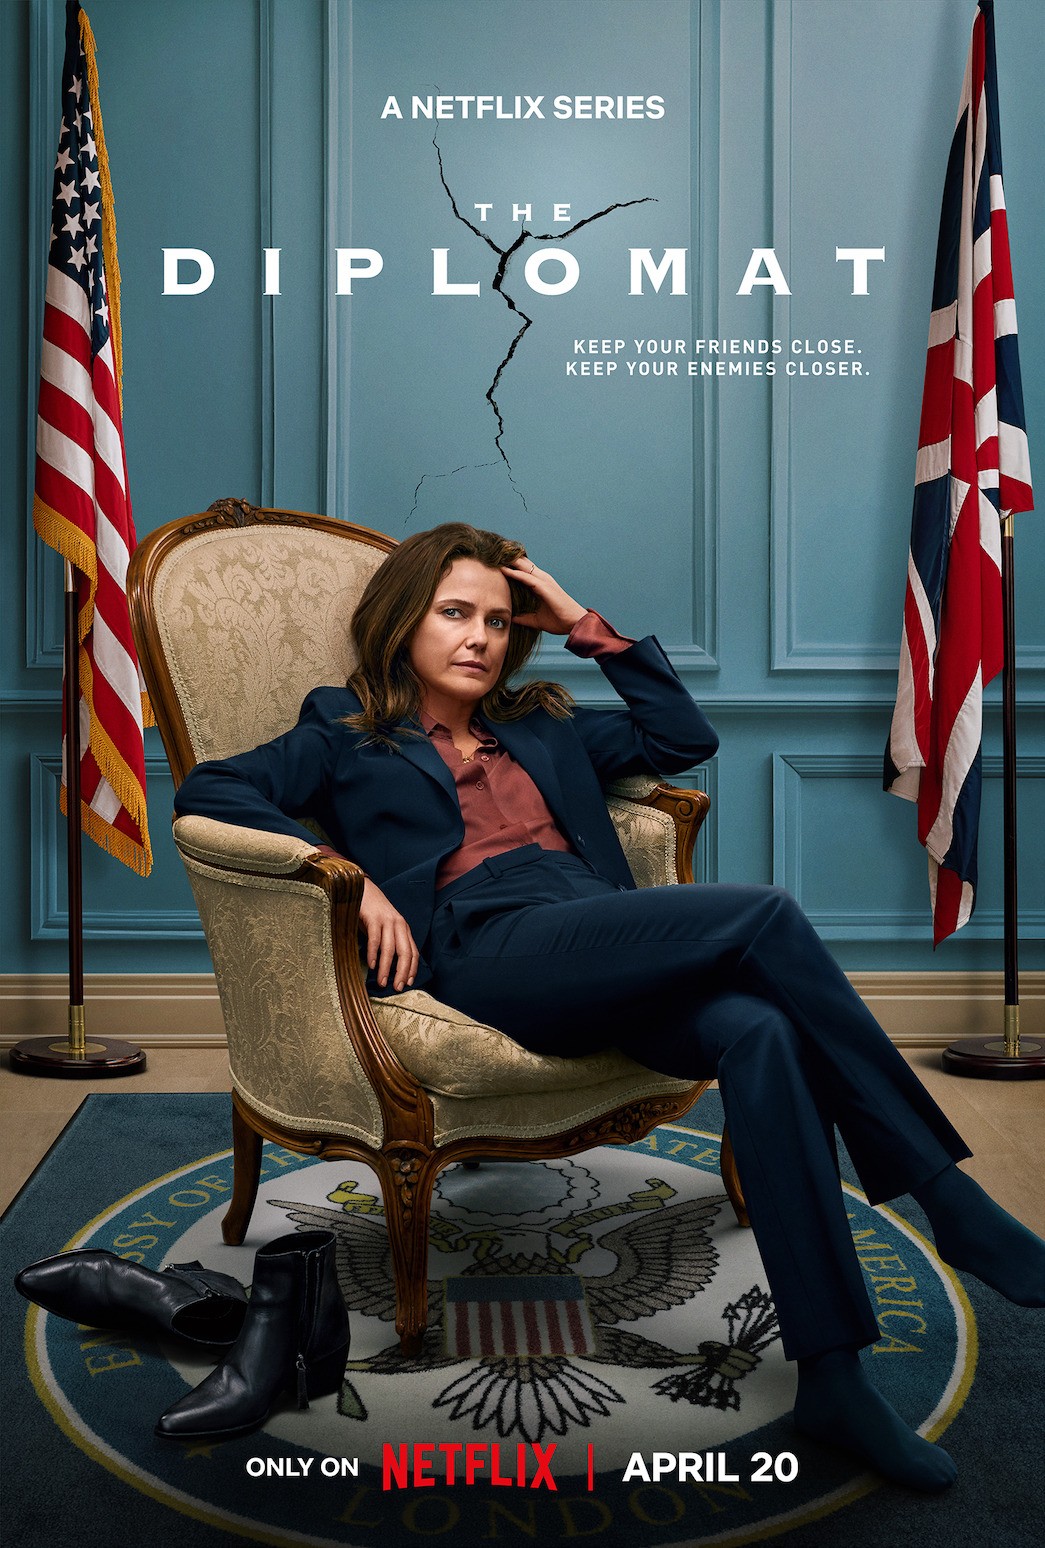 Netflix's The Diplomat